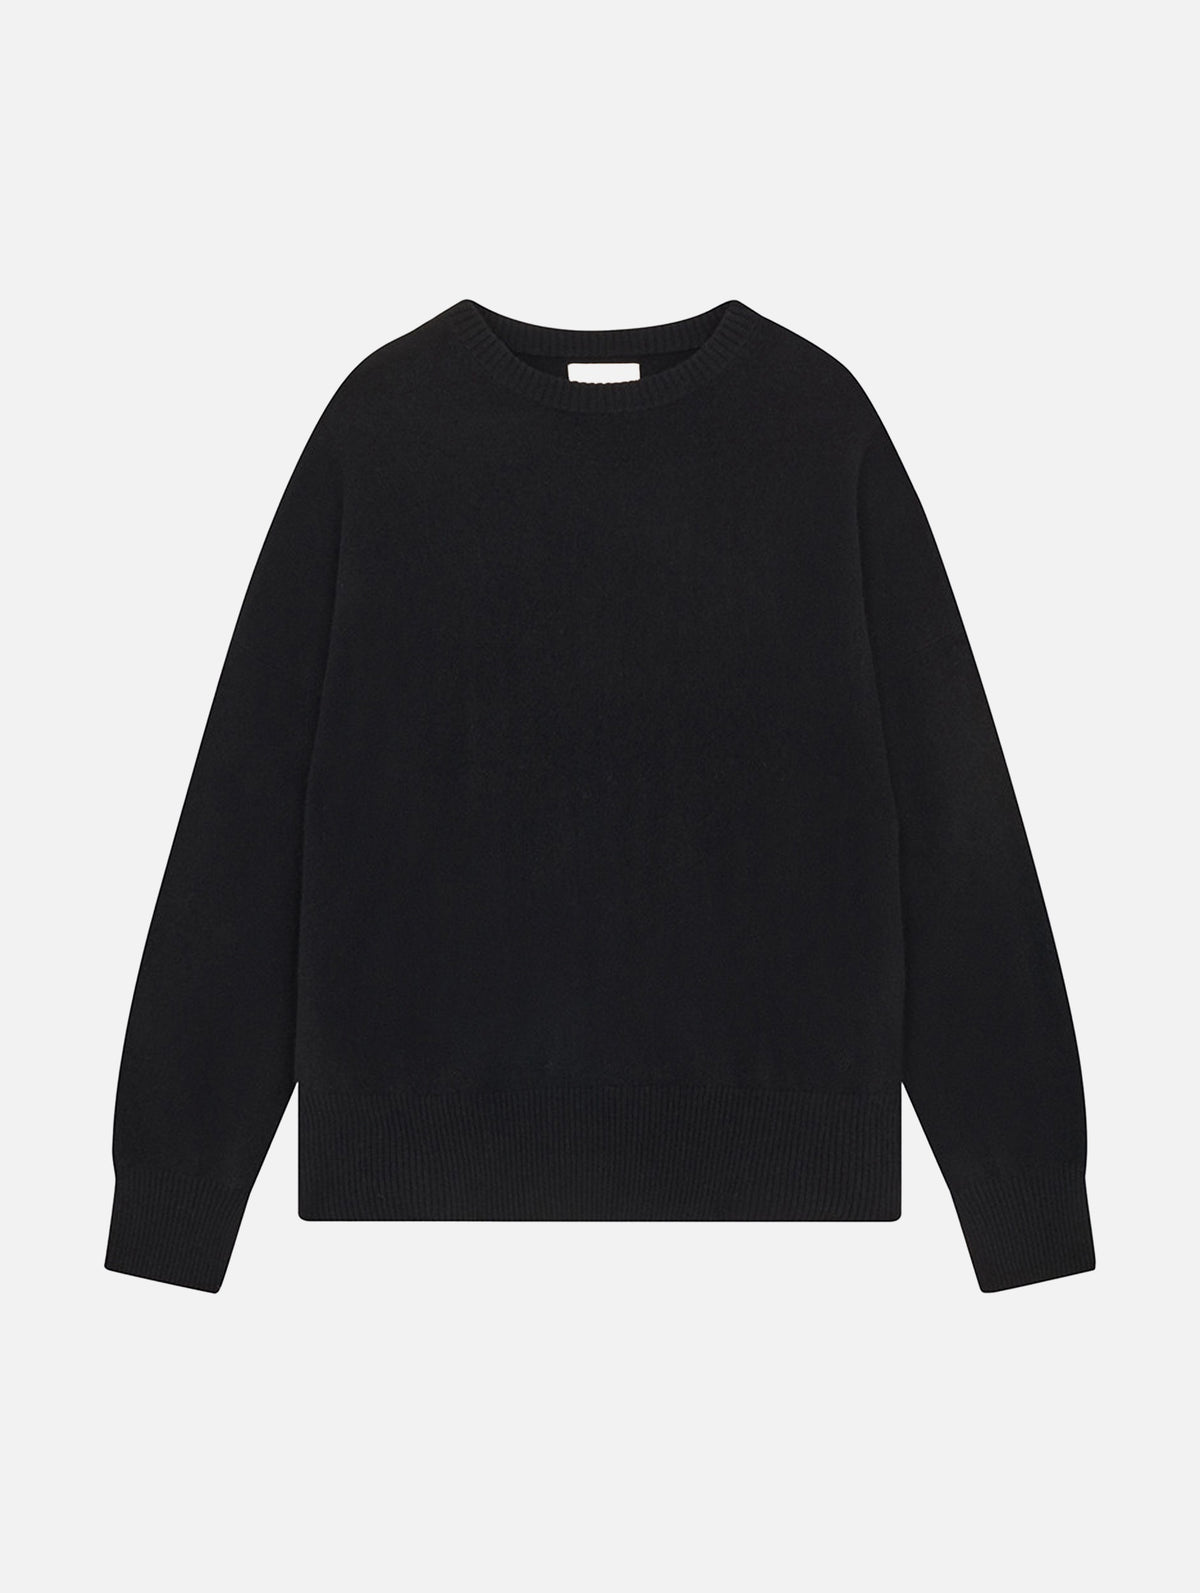 Anaa Cashmere Sweater in Black